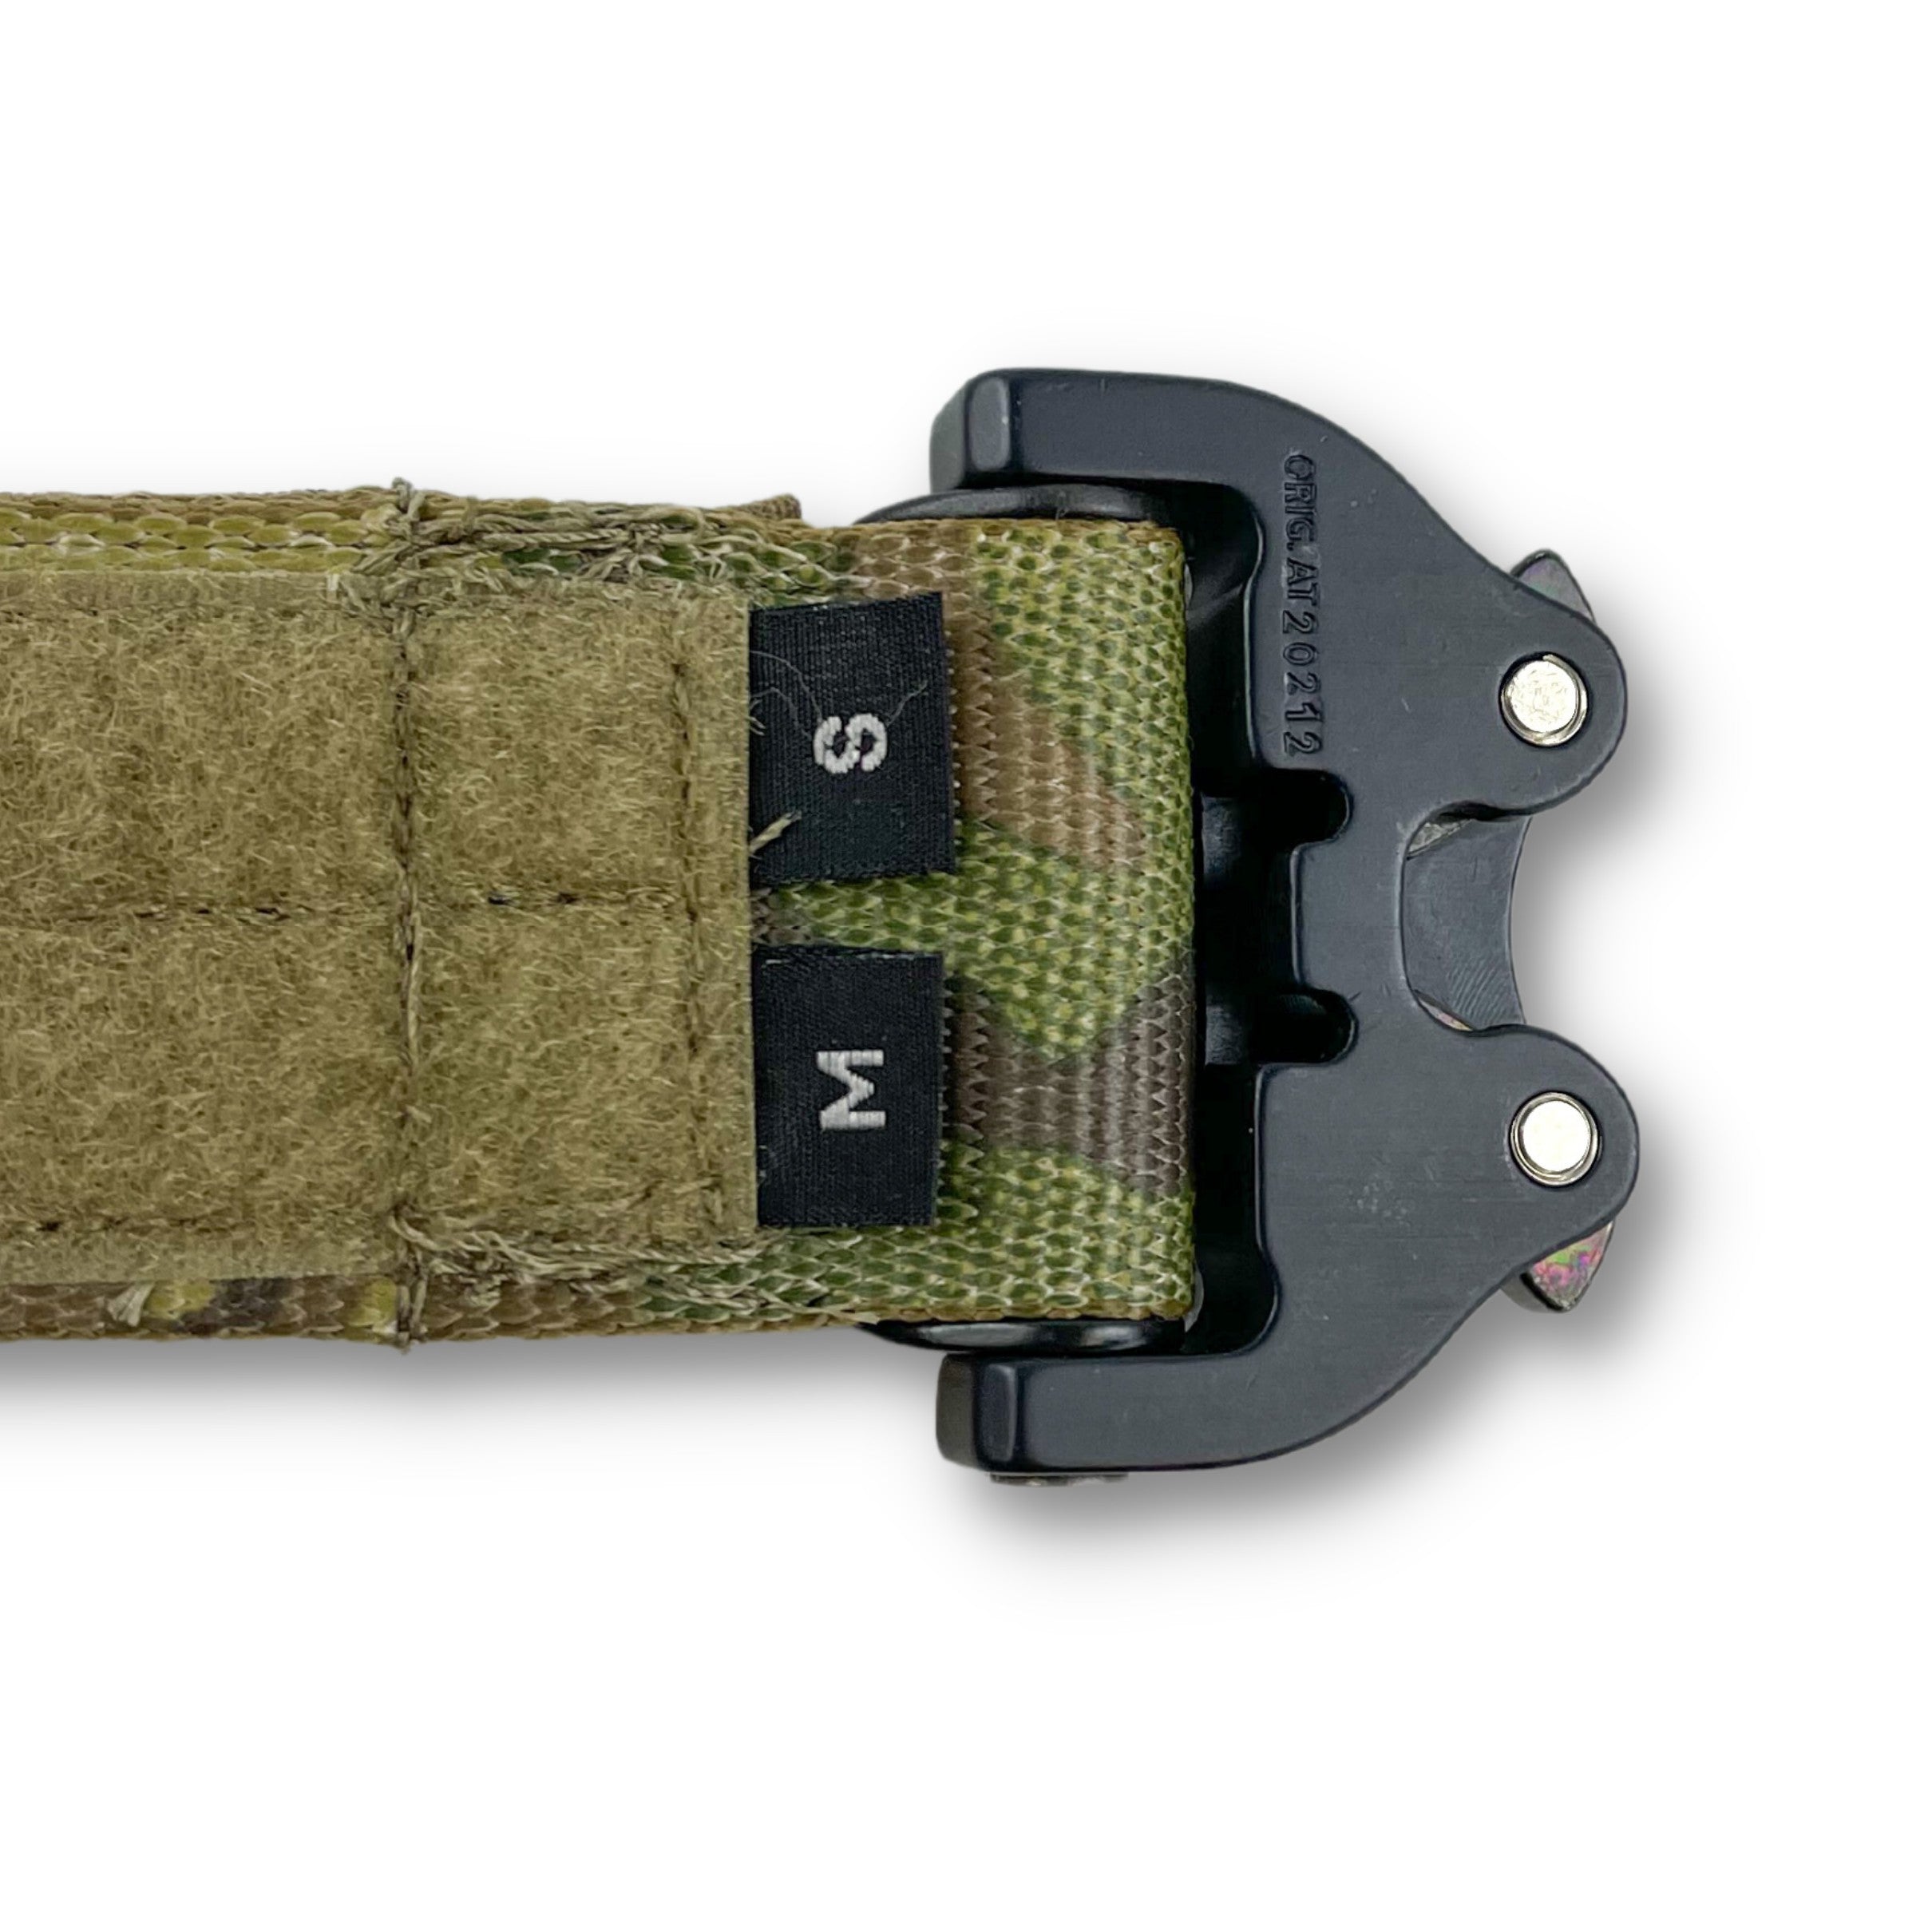 GBRS Group Assaulter Belt System V2 – GBRS Group Gear